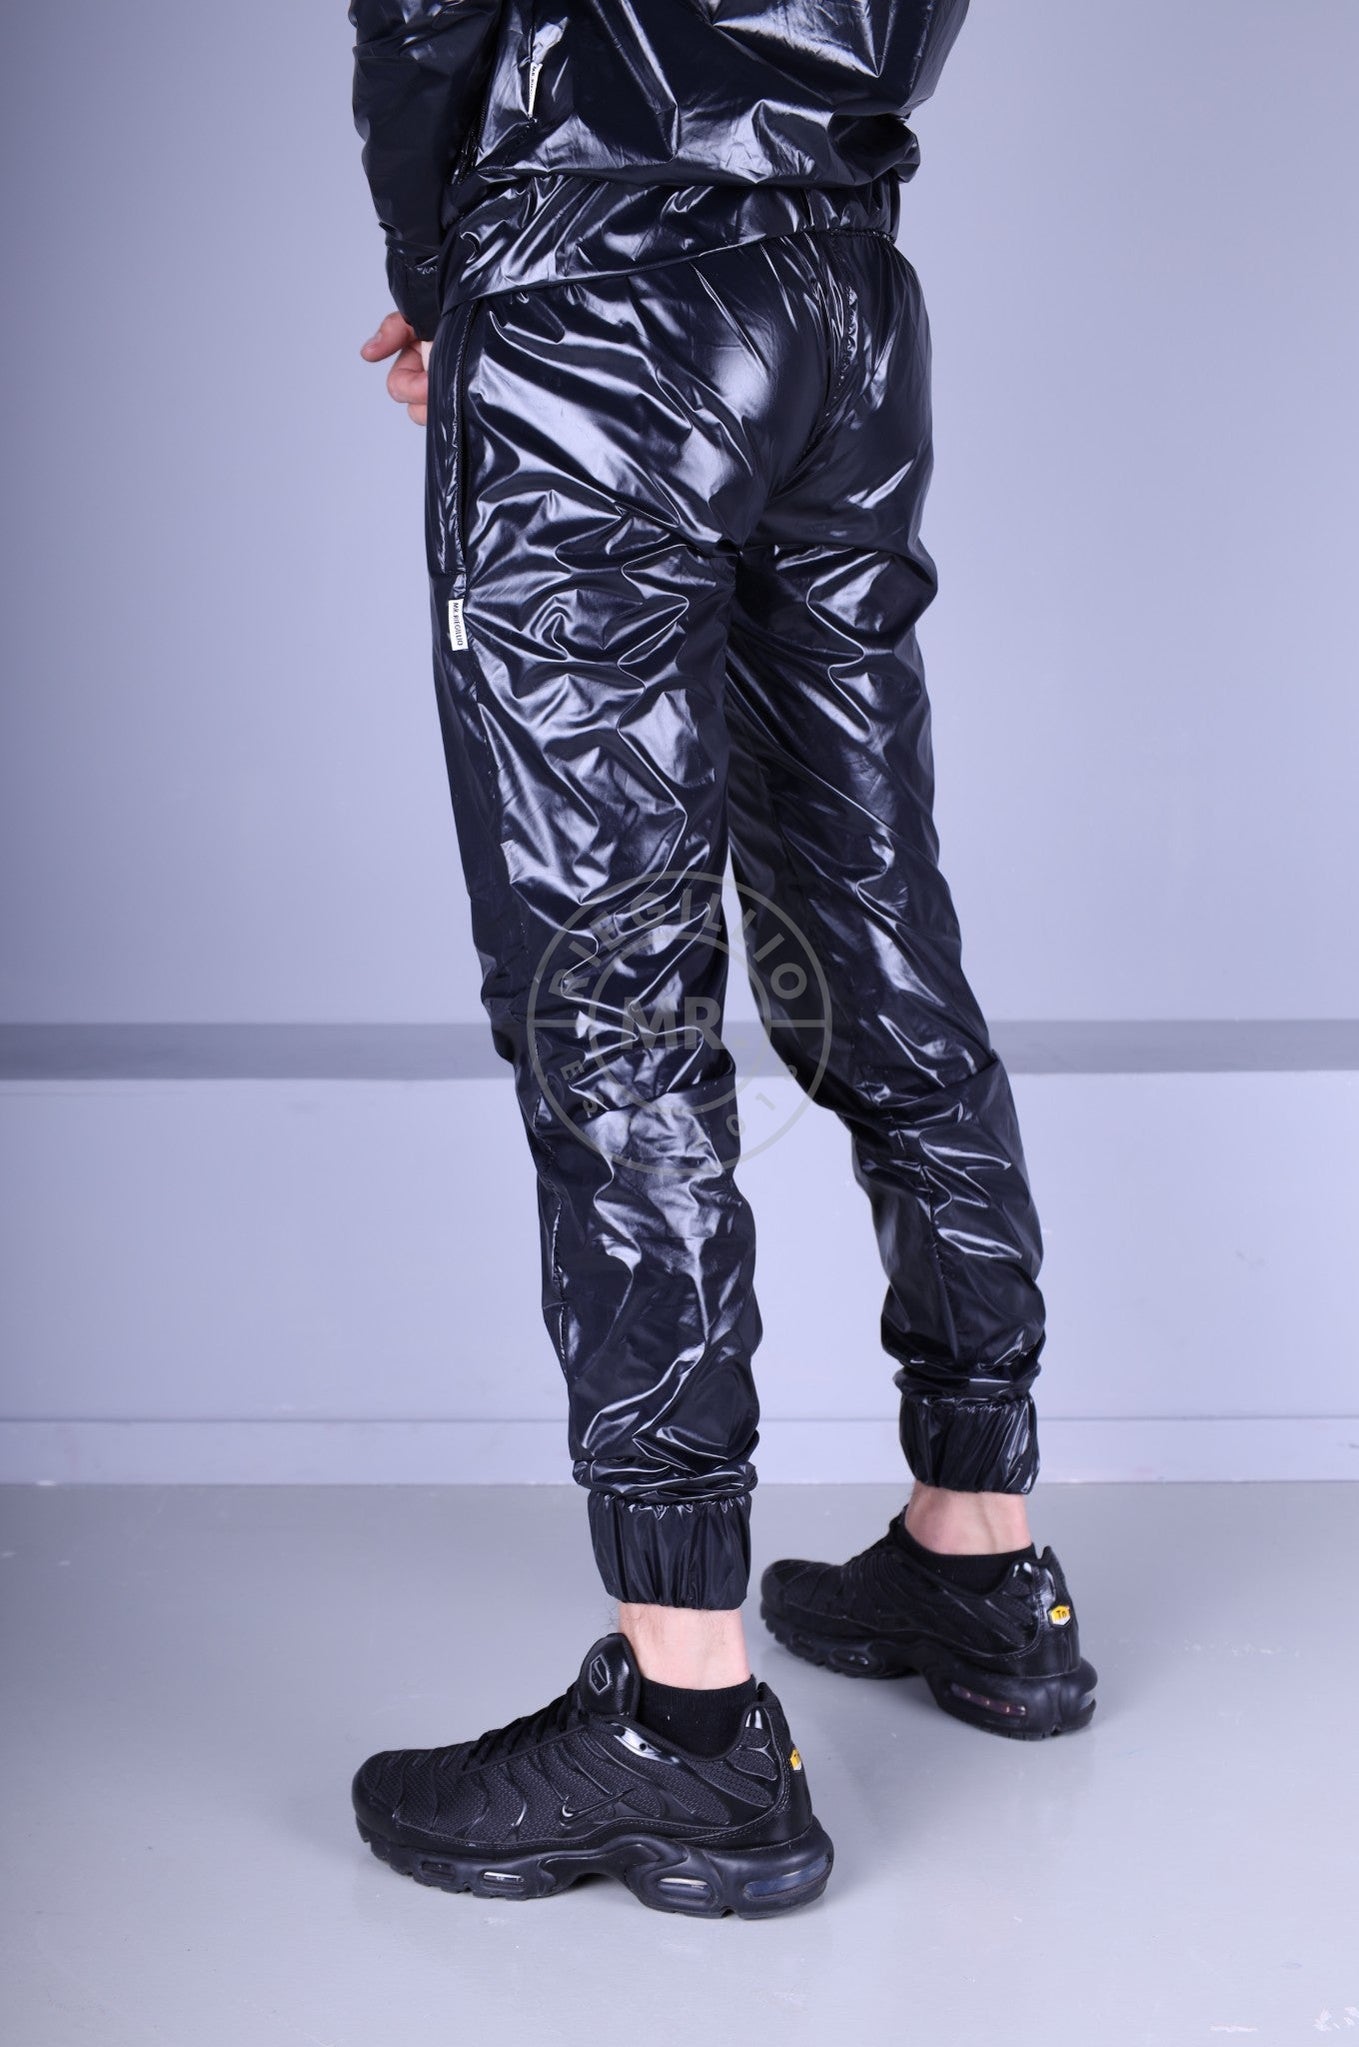 Full Black Shiny Nylon Tracksuit Pants by MR. Riegillio